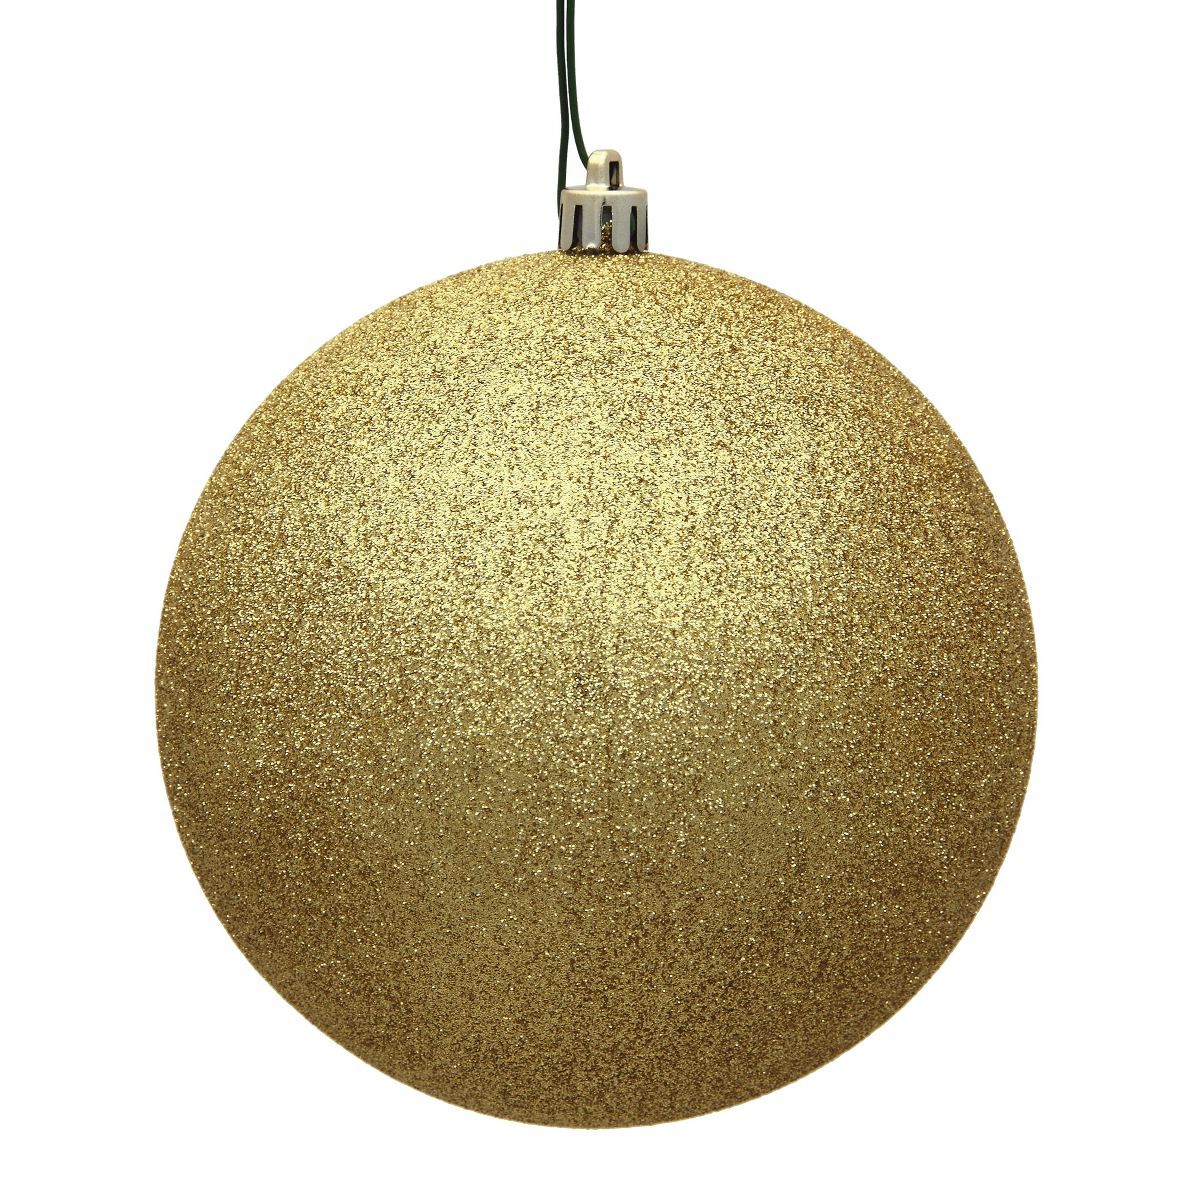 Vickerman Gold Ball Ornament | Target